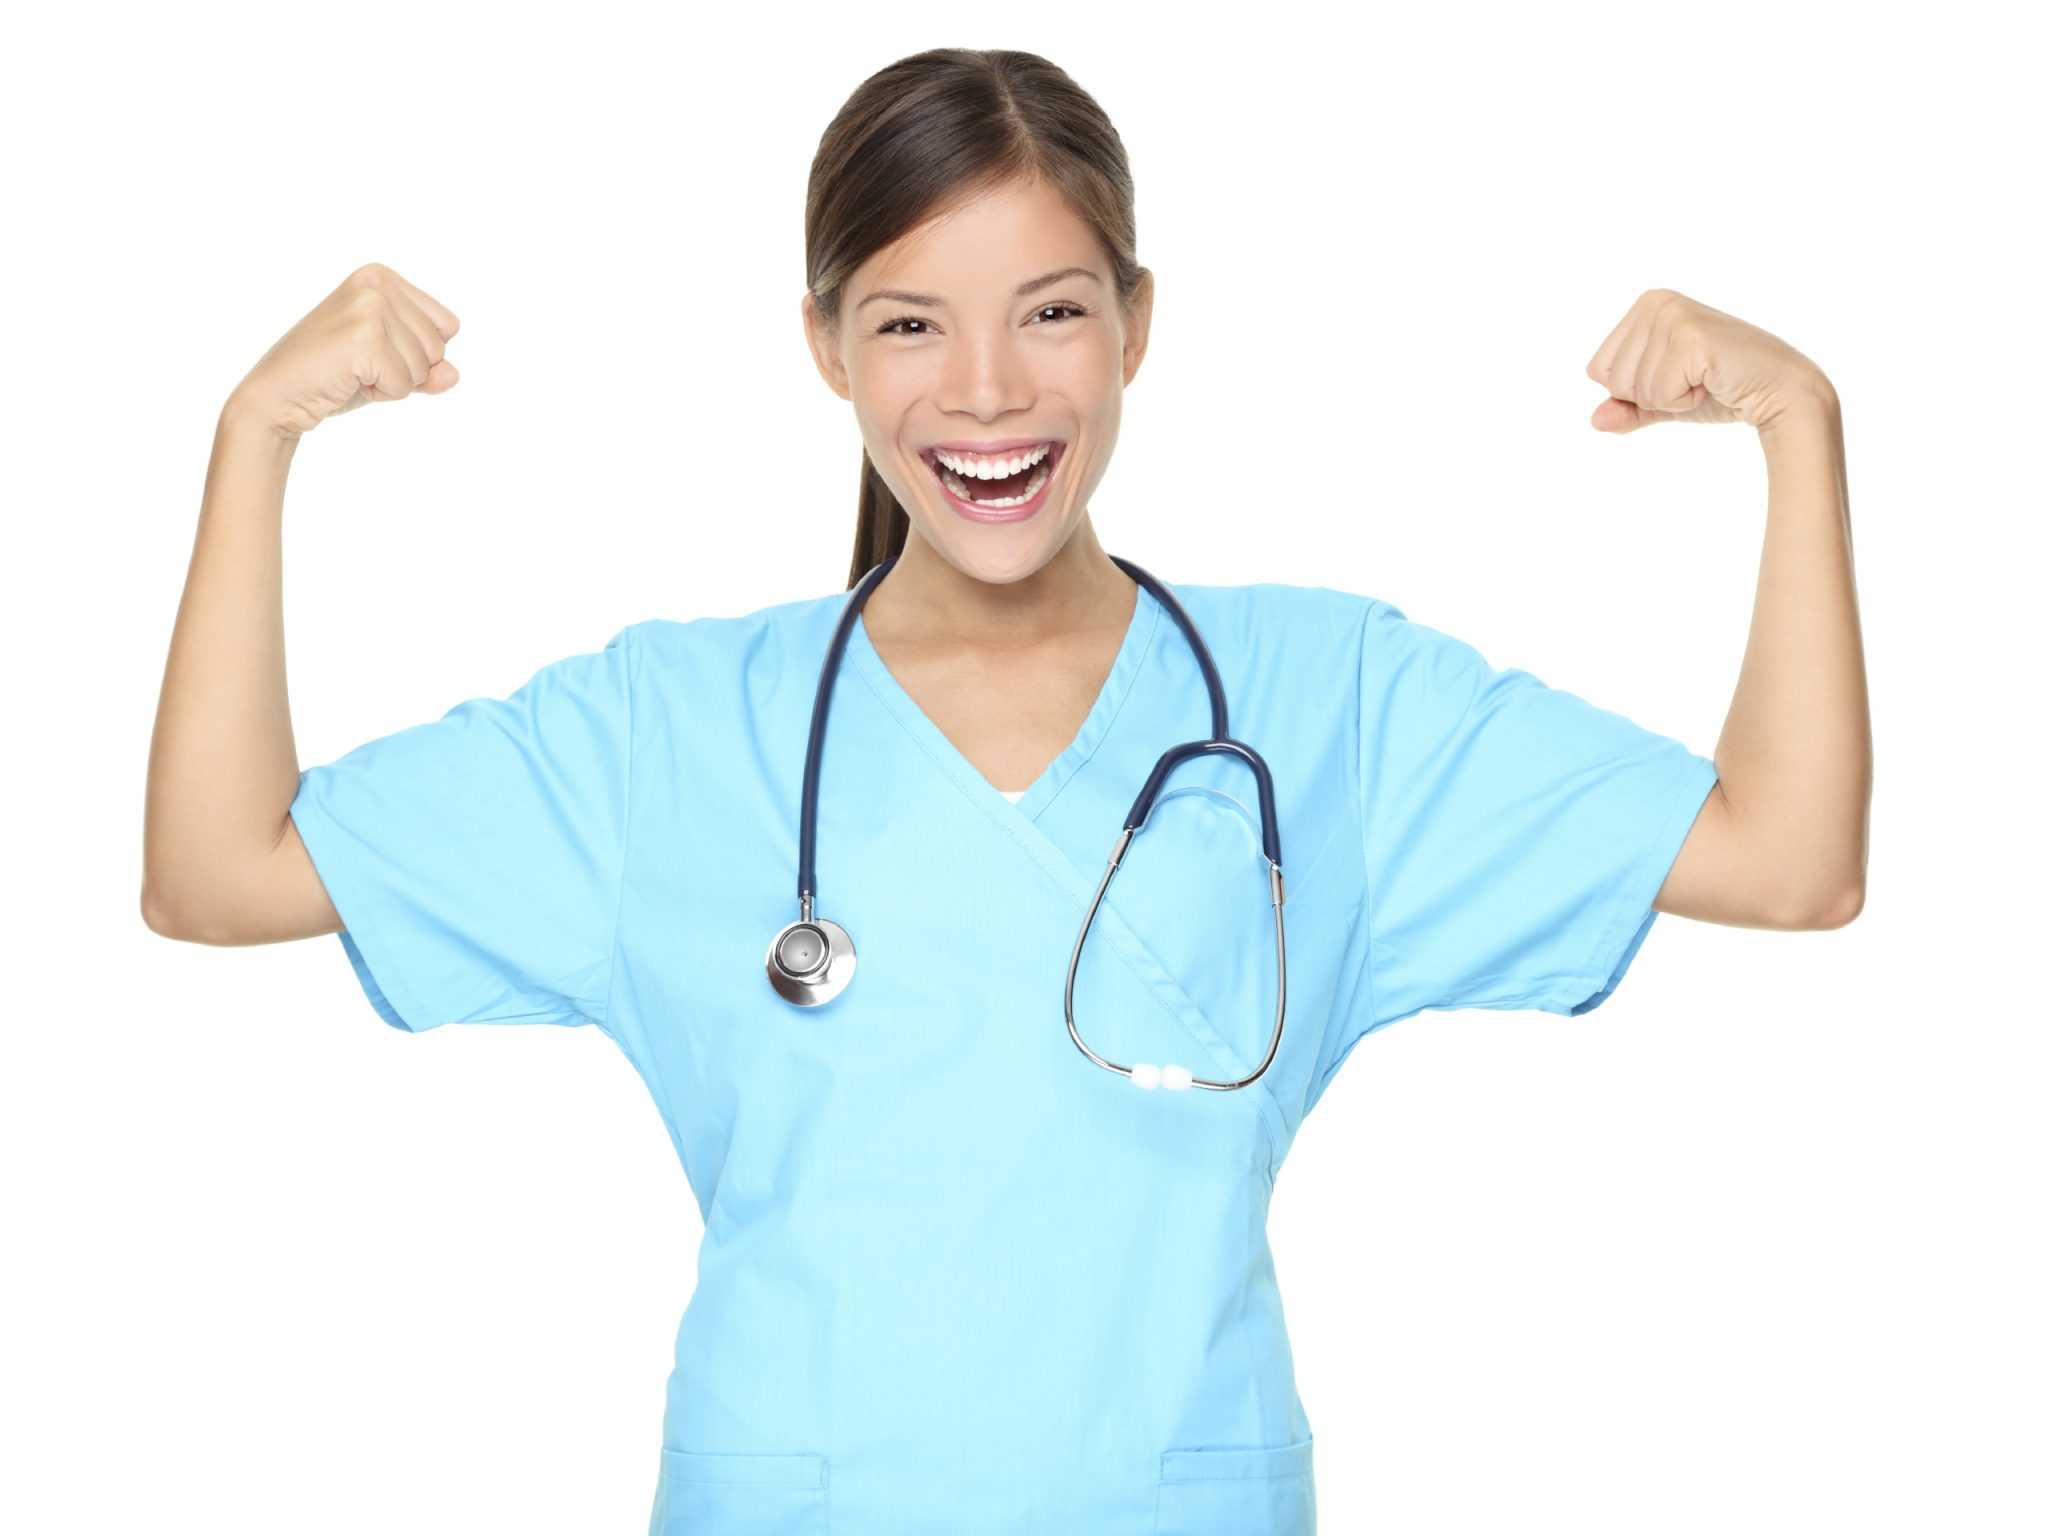 Nurse muscle power strength